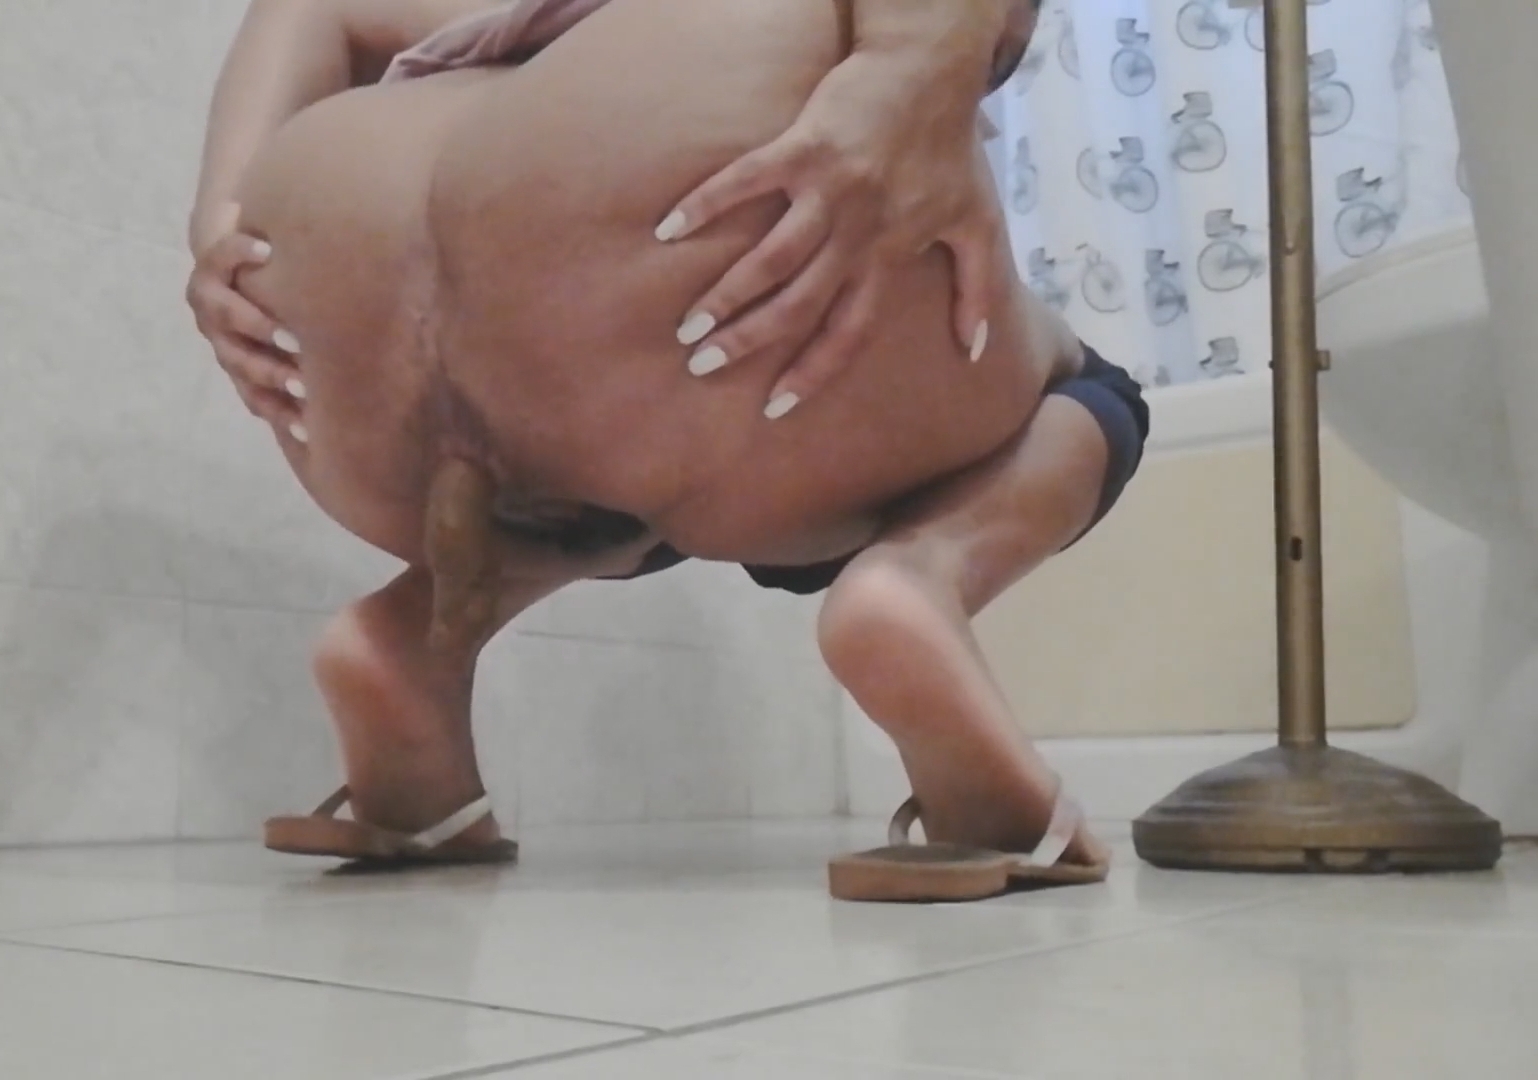 Fat ass ebony shitting on bathroom floor